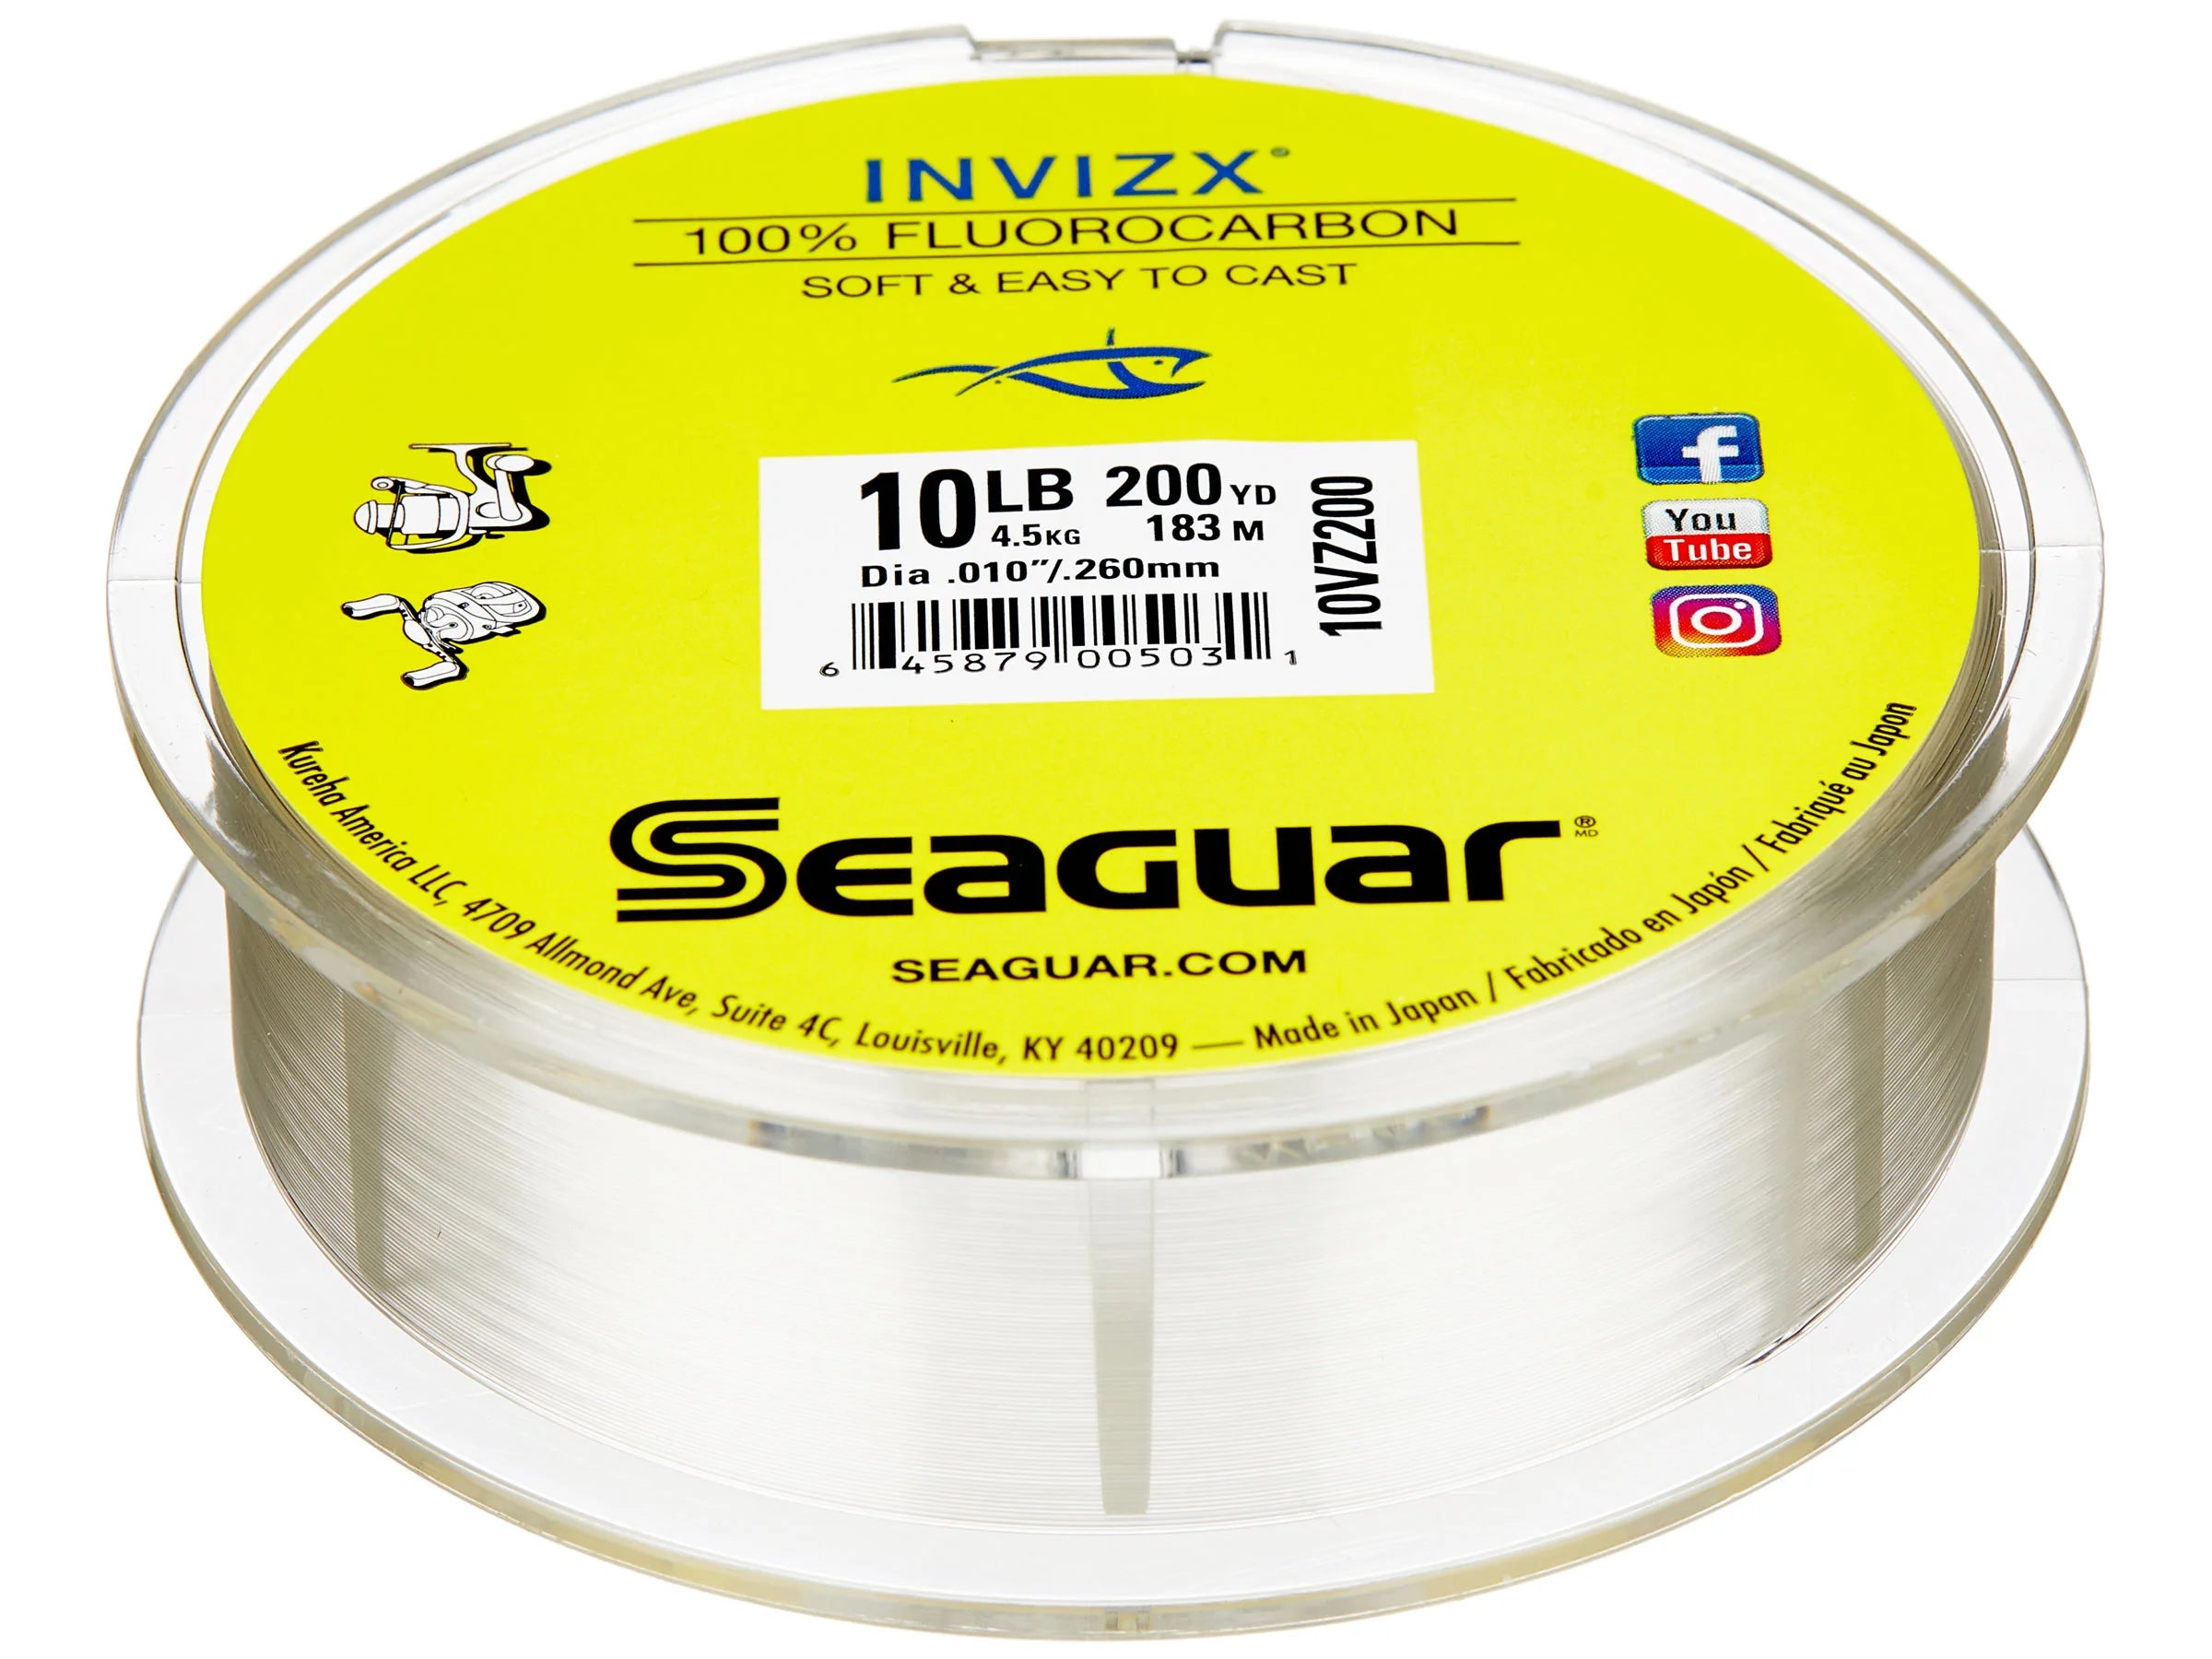 Seaguar InvizX Fluorocarbon Fishing Line, 200 yd